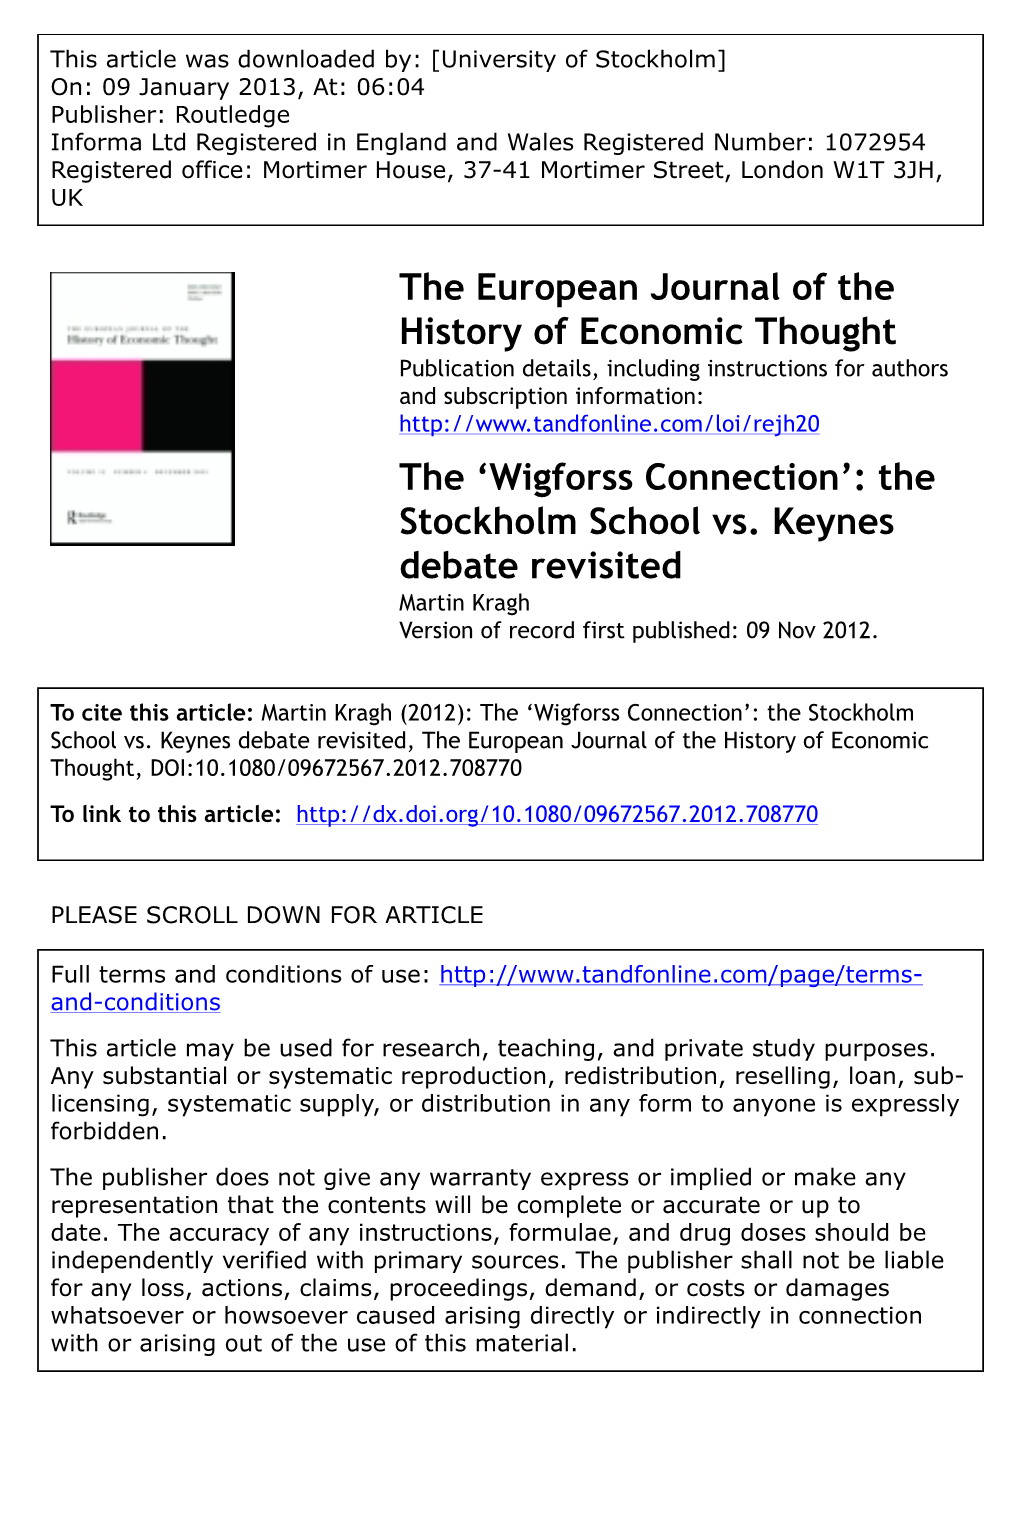 'Wigforss Connection': the Stockholm School Vs. Keynes